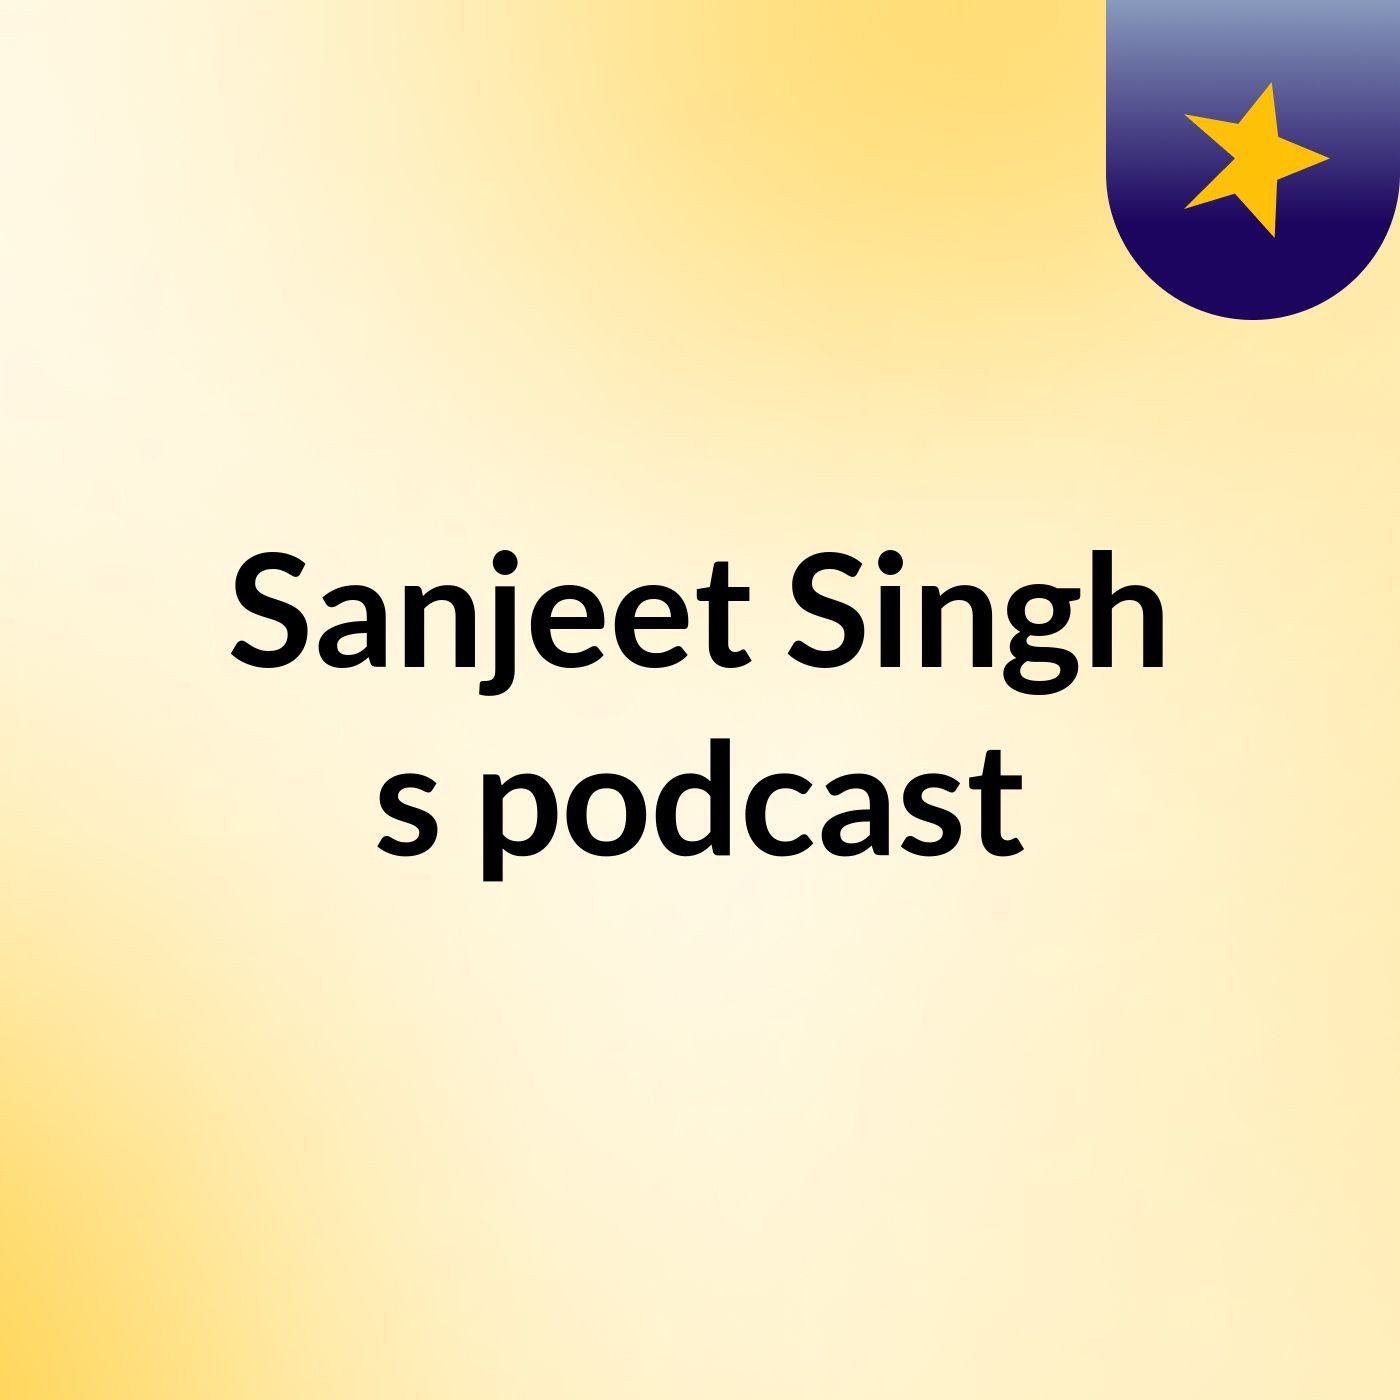 Sanjeet Singh's podcast